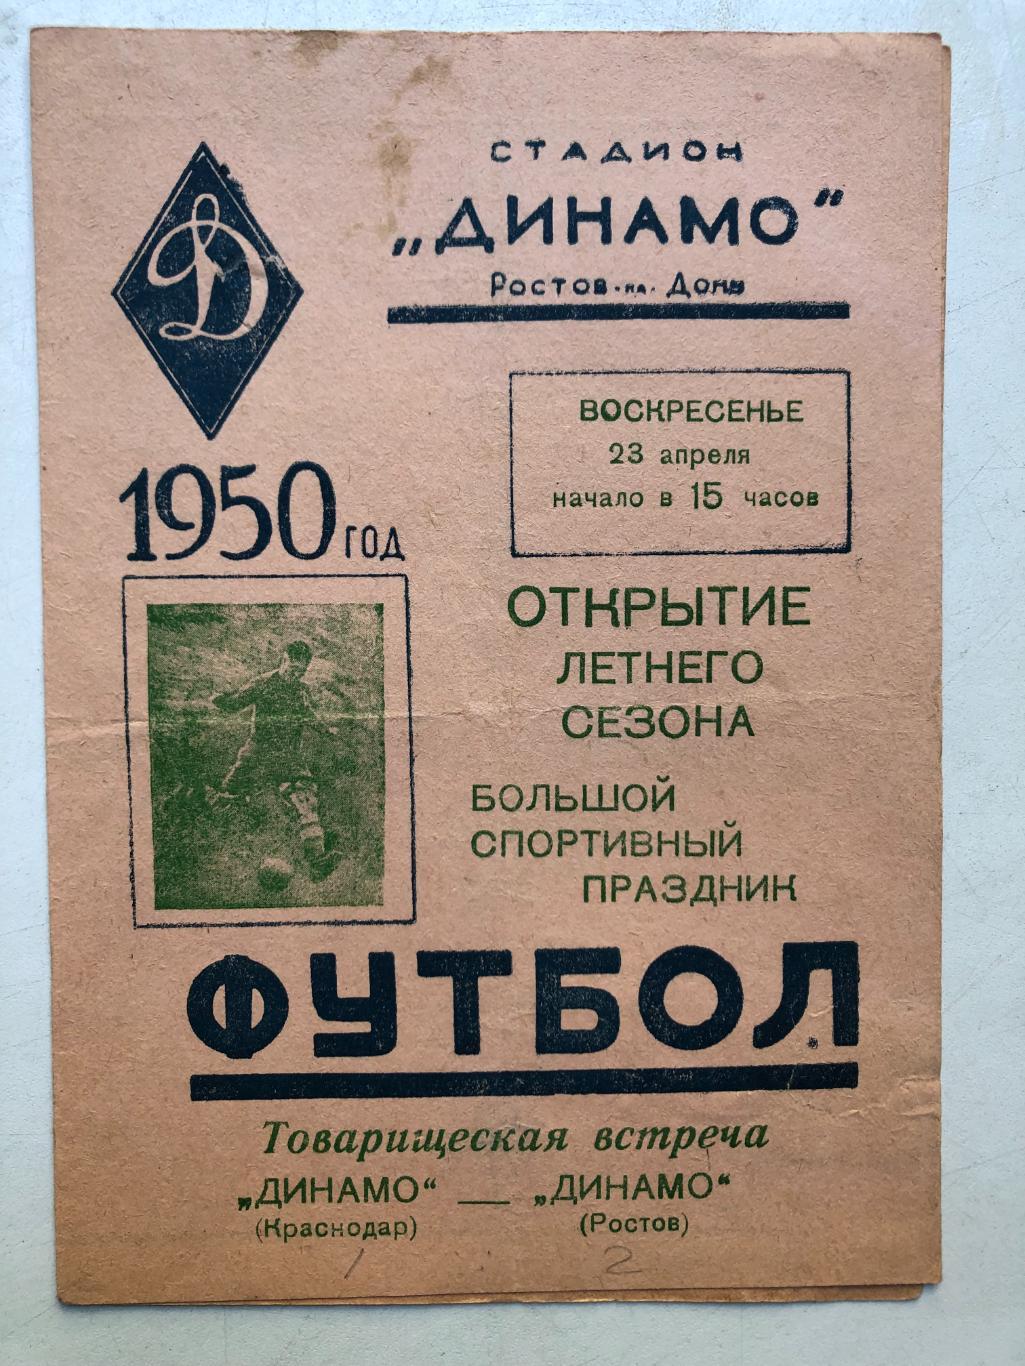 Динамо Ростов - Динамо Краснодар 23.04.1950